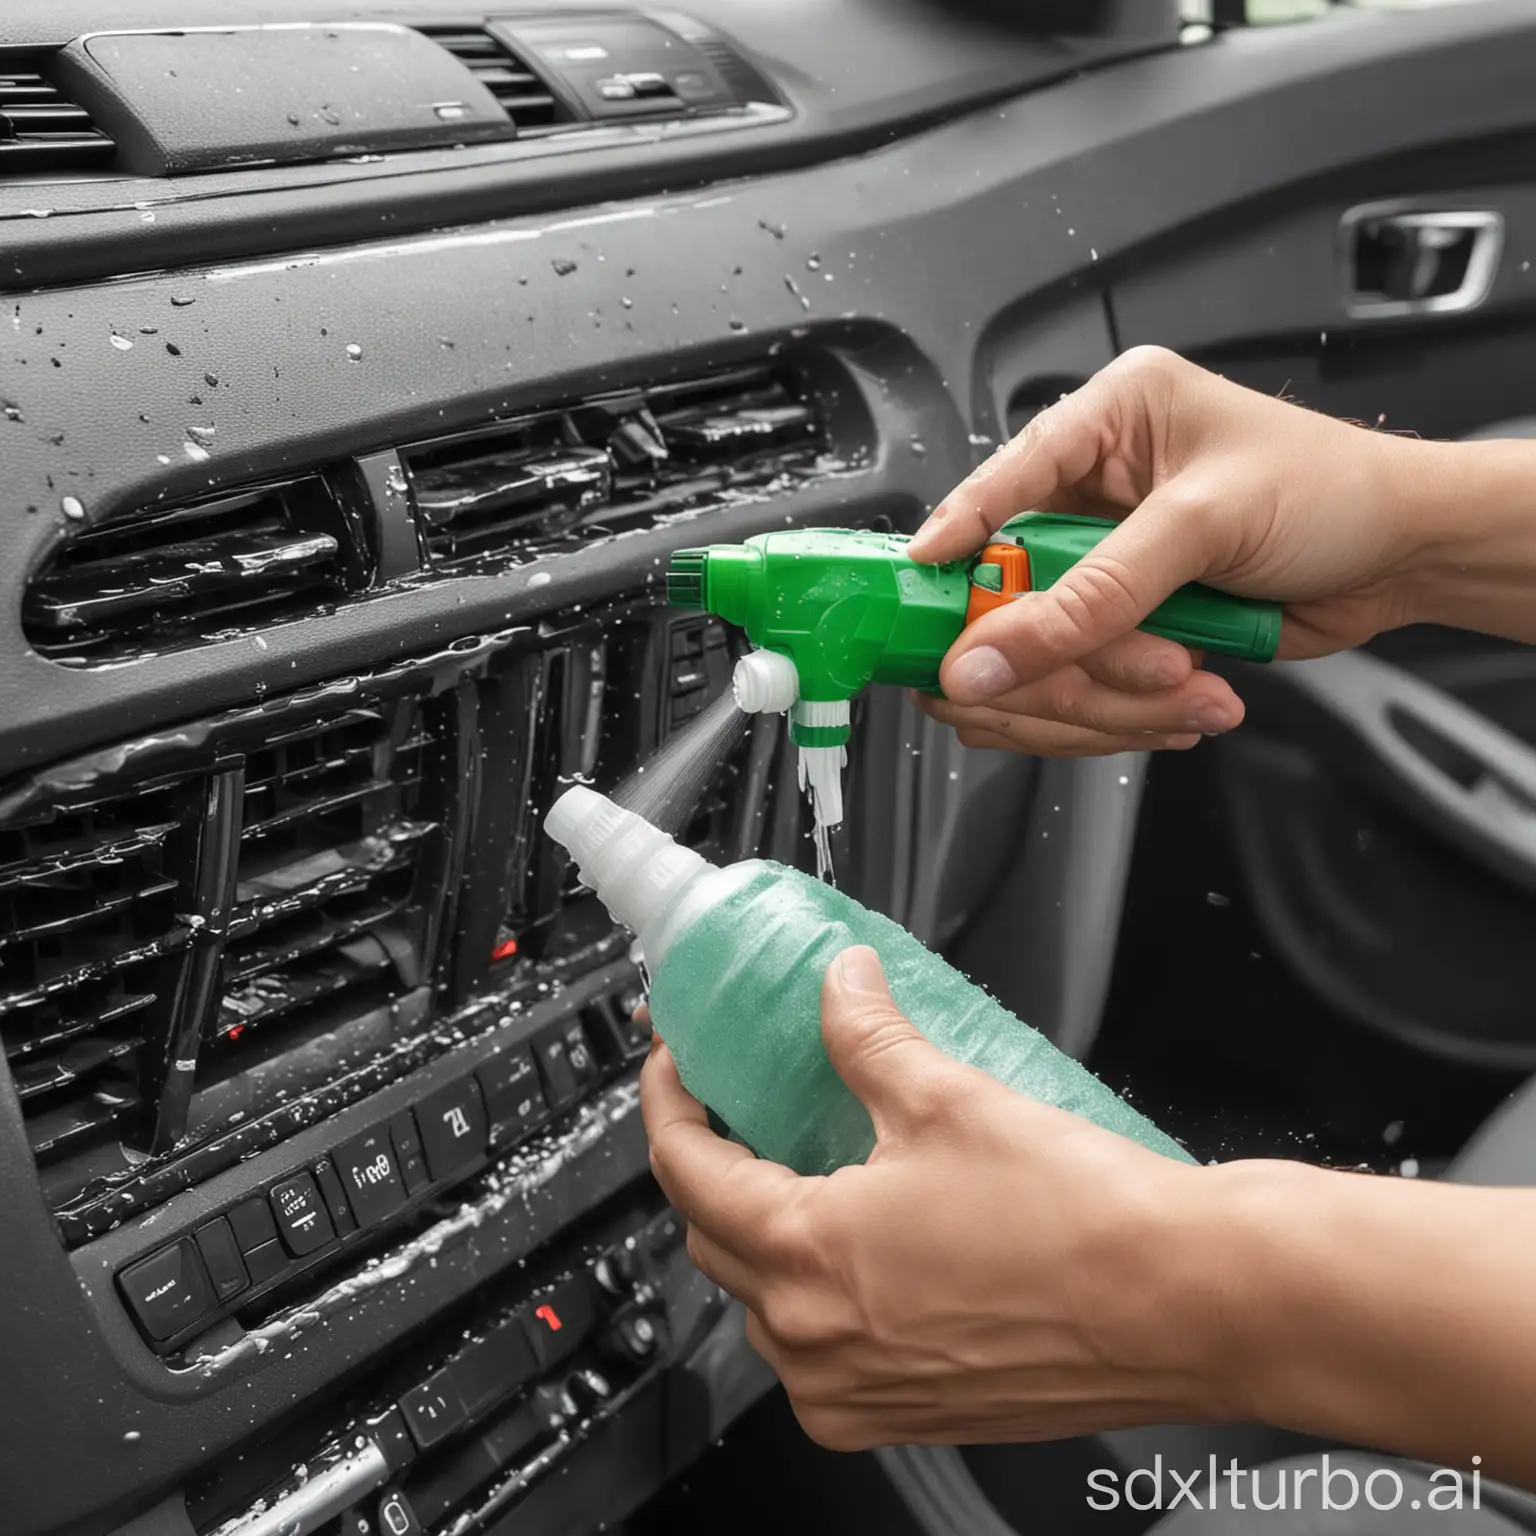 Cleaning-Spray-Tube-Inside-Car-AC-Vent-Refreshing-Car-Interior-Maintenance